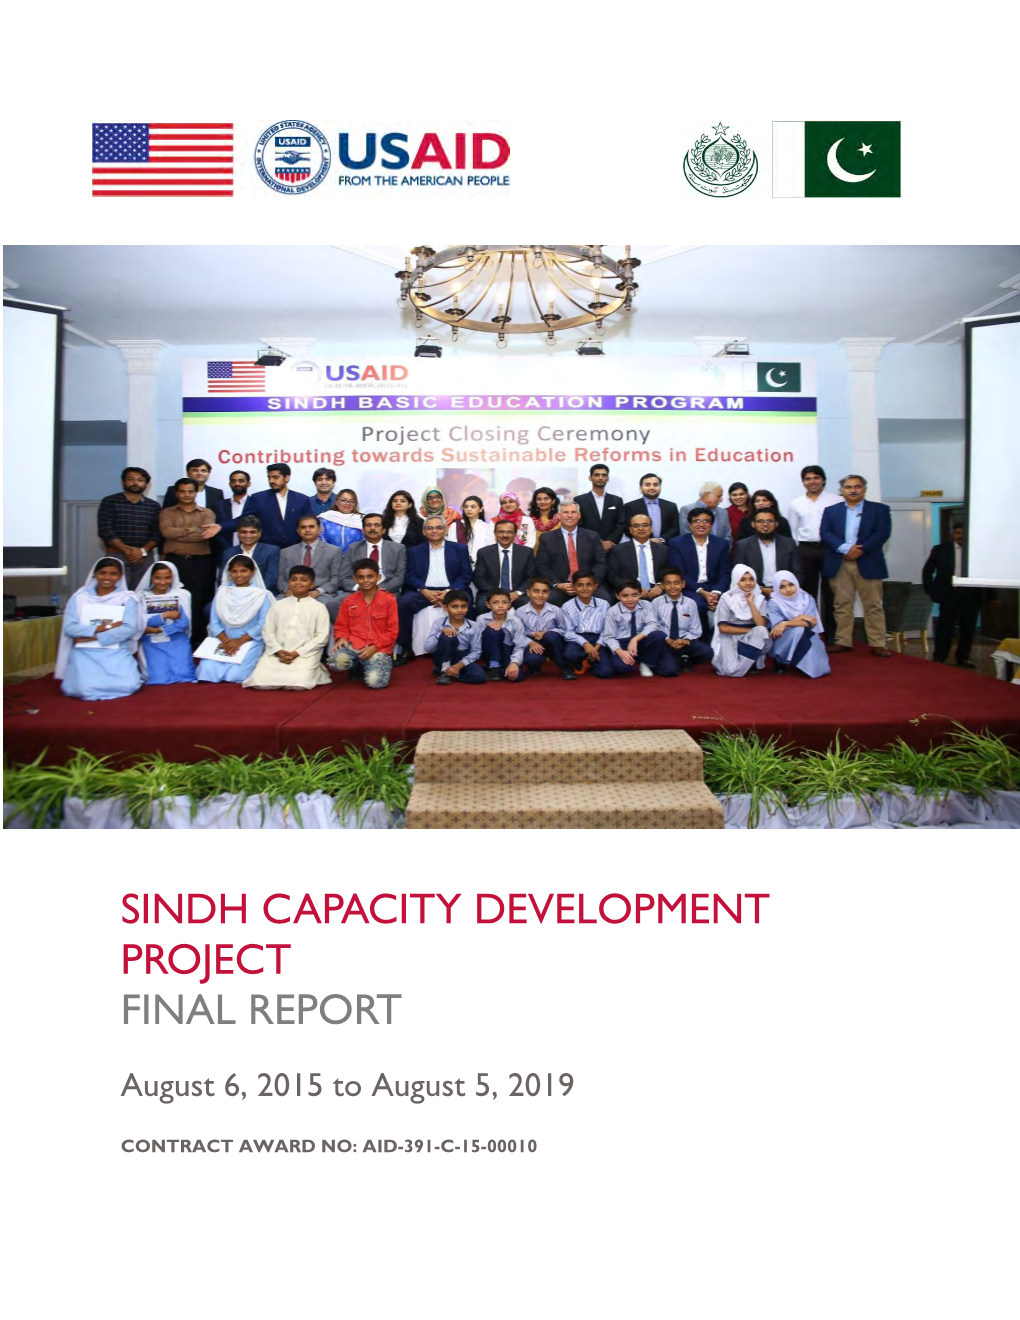 Sindh Capacity Development Project Final Report